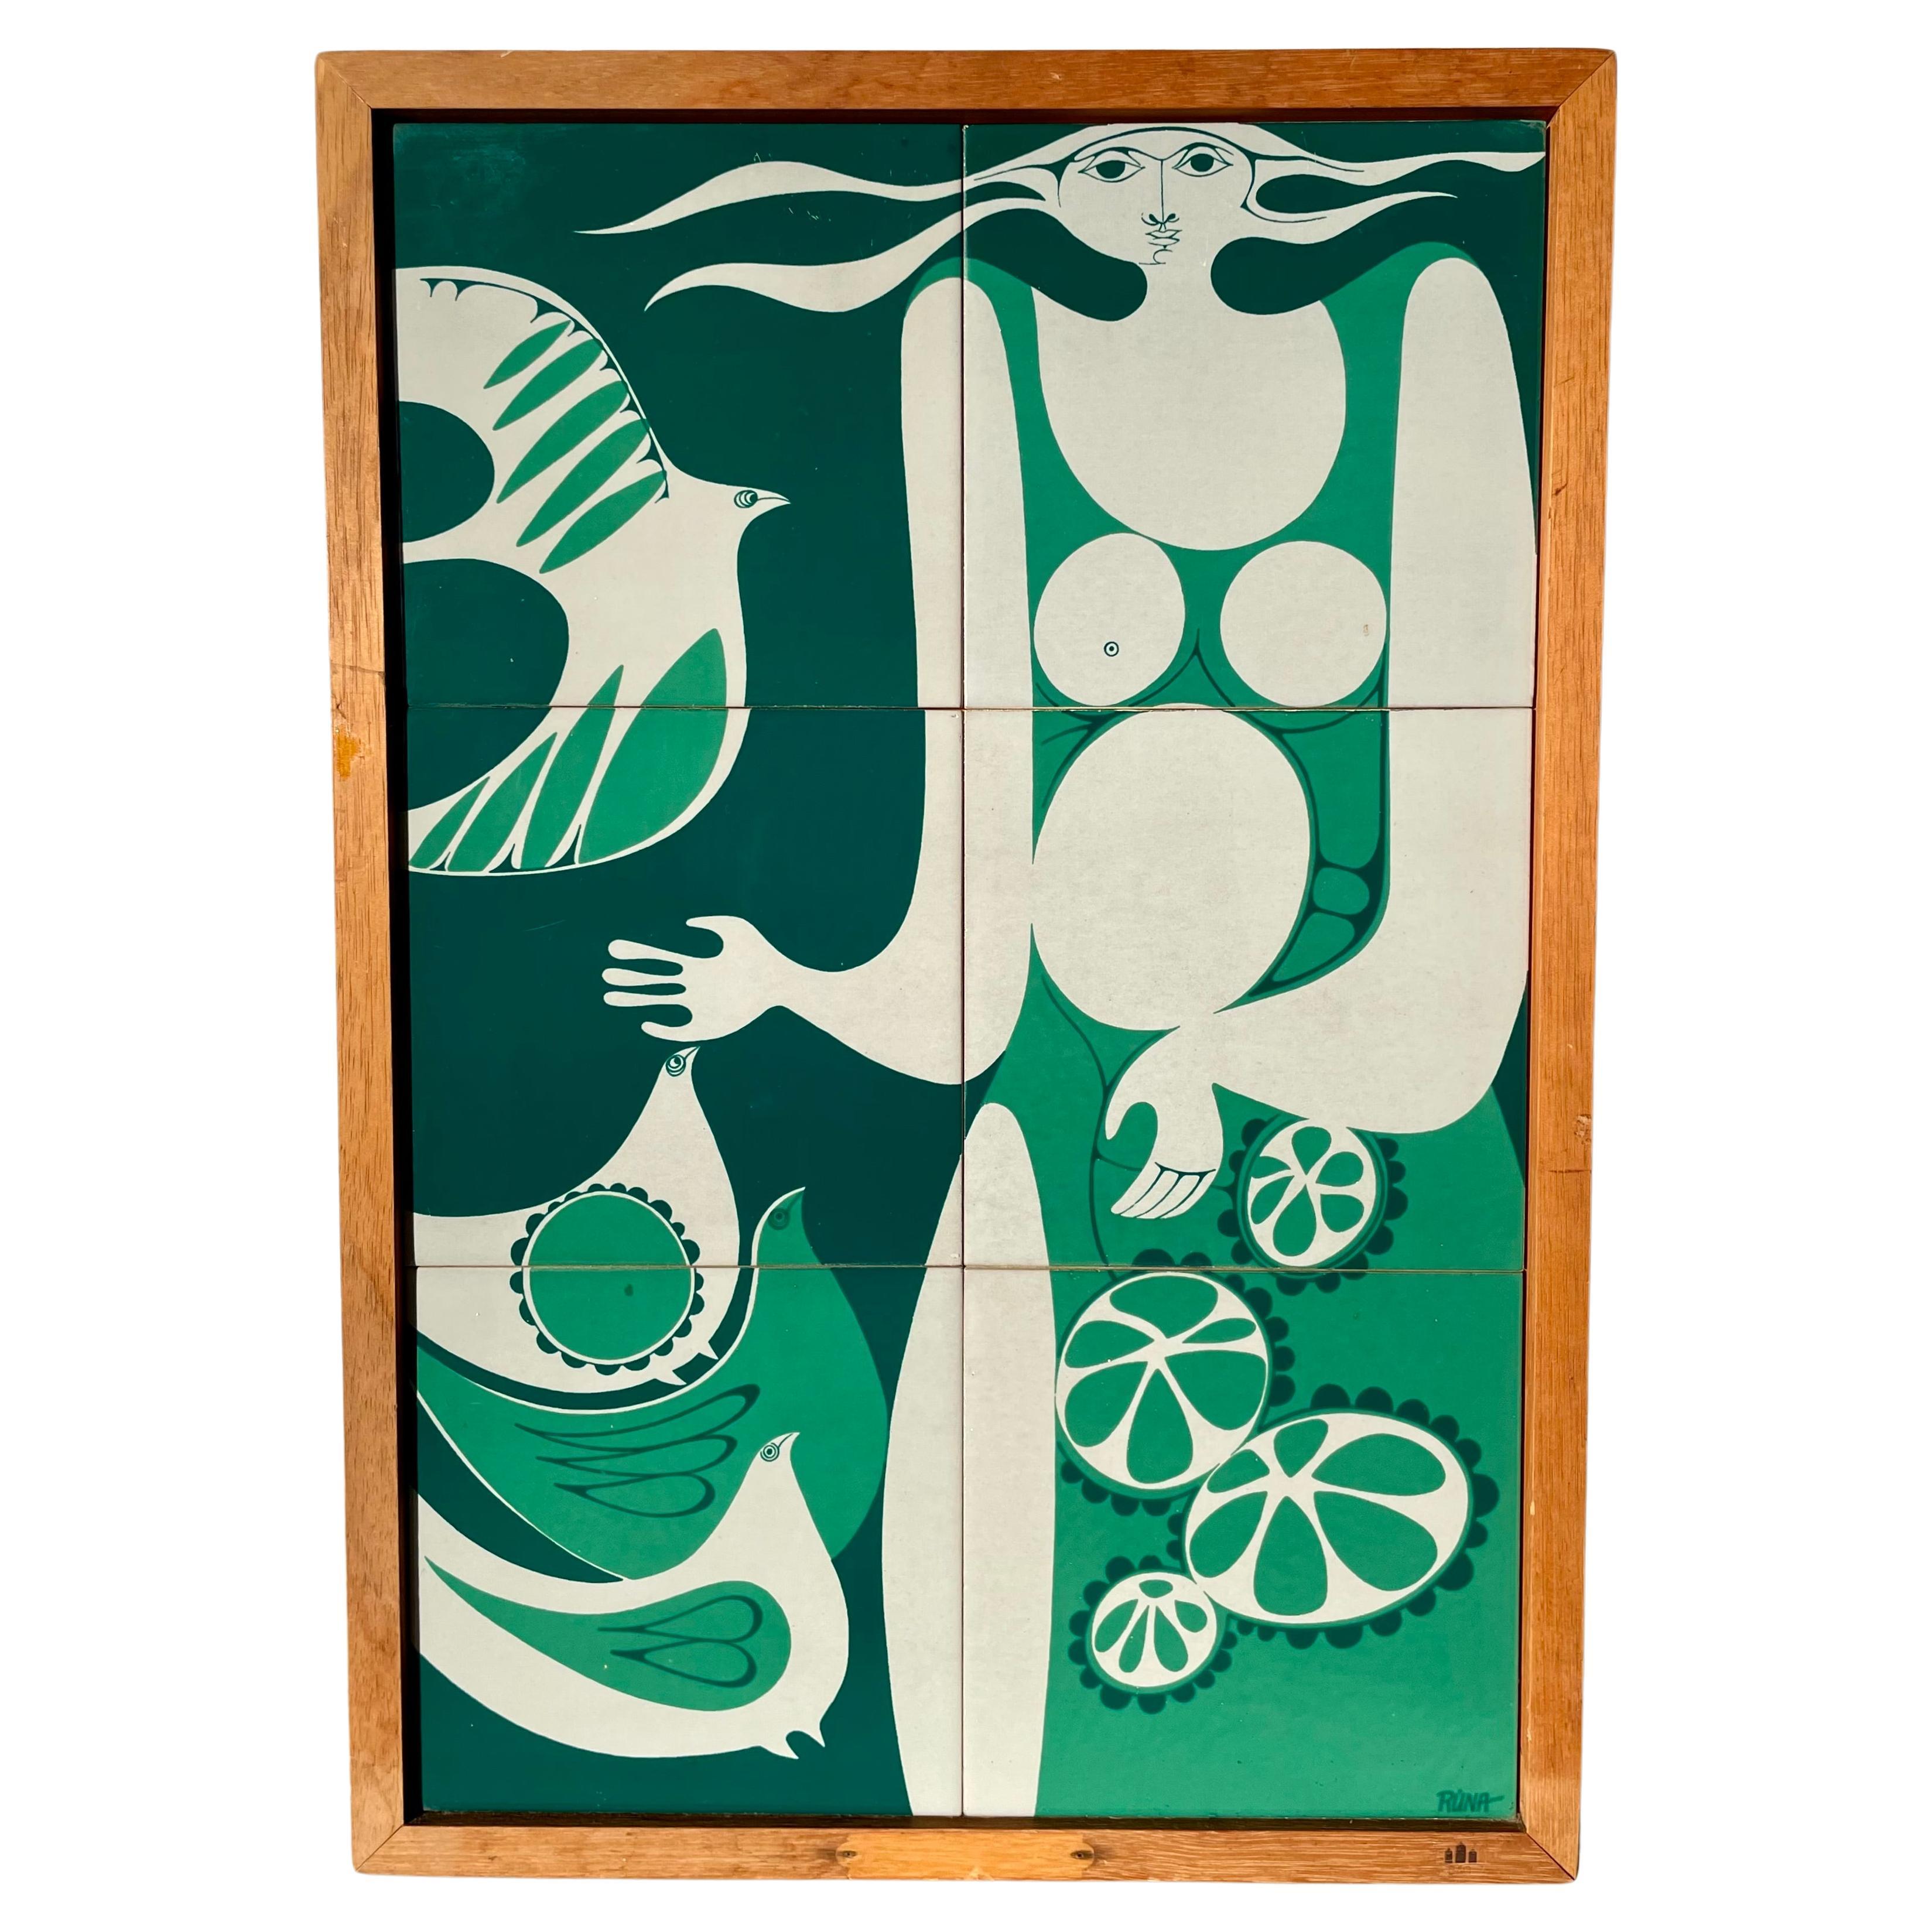 Bing & Grondahl Modernist Green Tile Wall Art Piece, 1960s For Sale